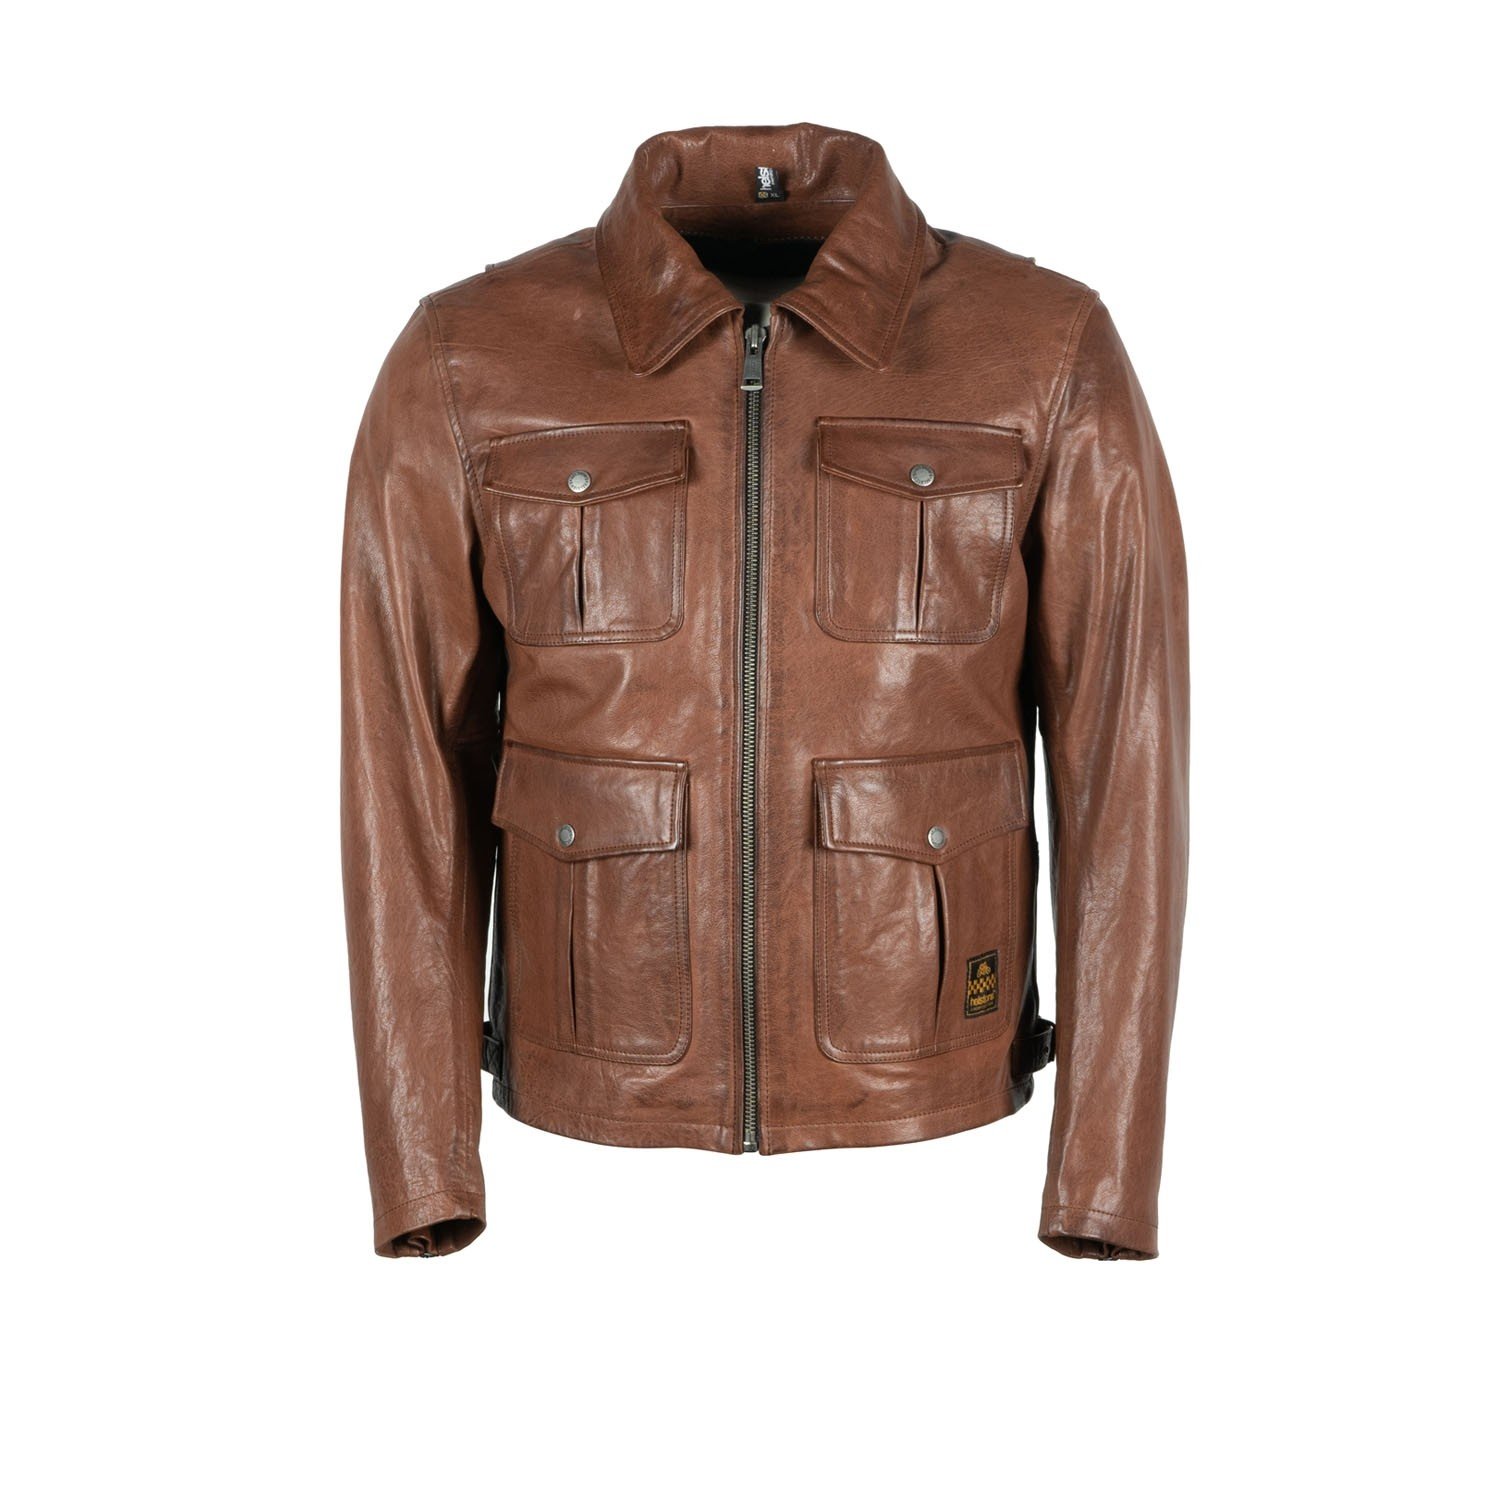 Image of Helstons Joey Leather Rag Jacket Brown Size S ID 3662136083325